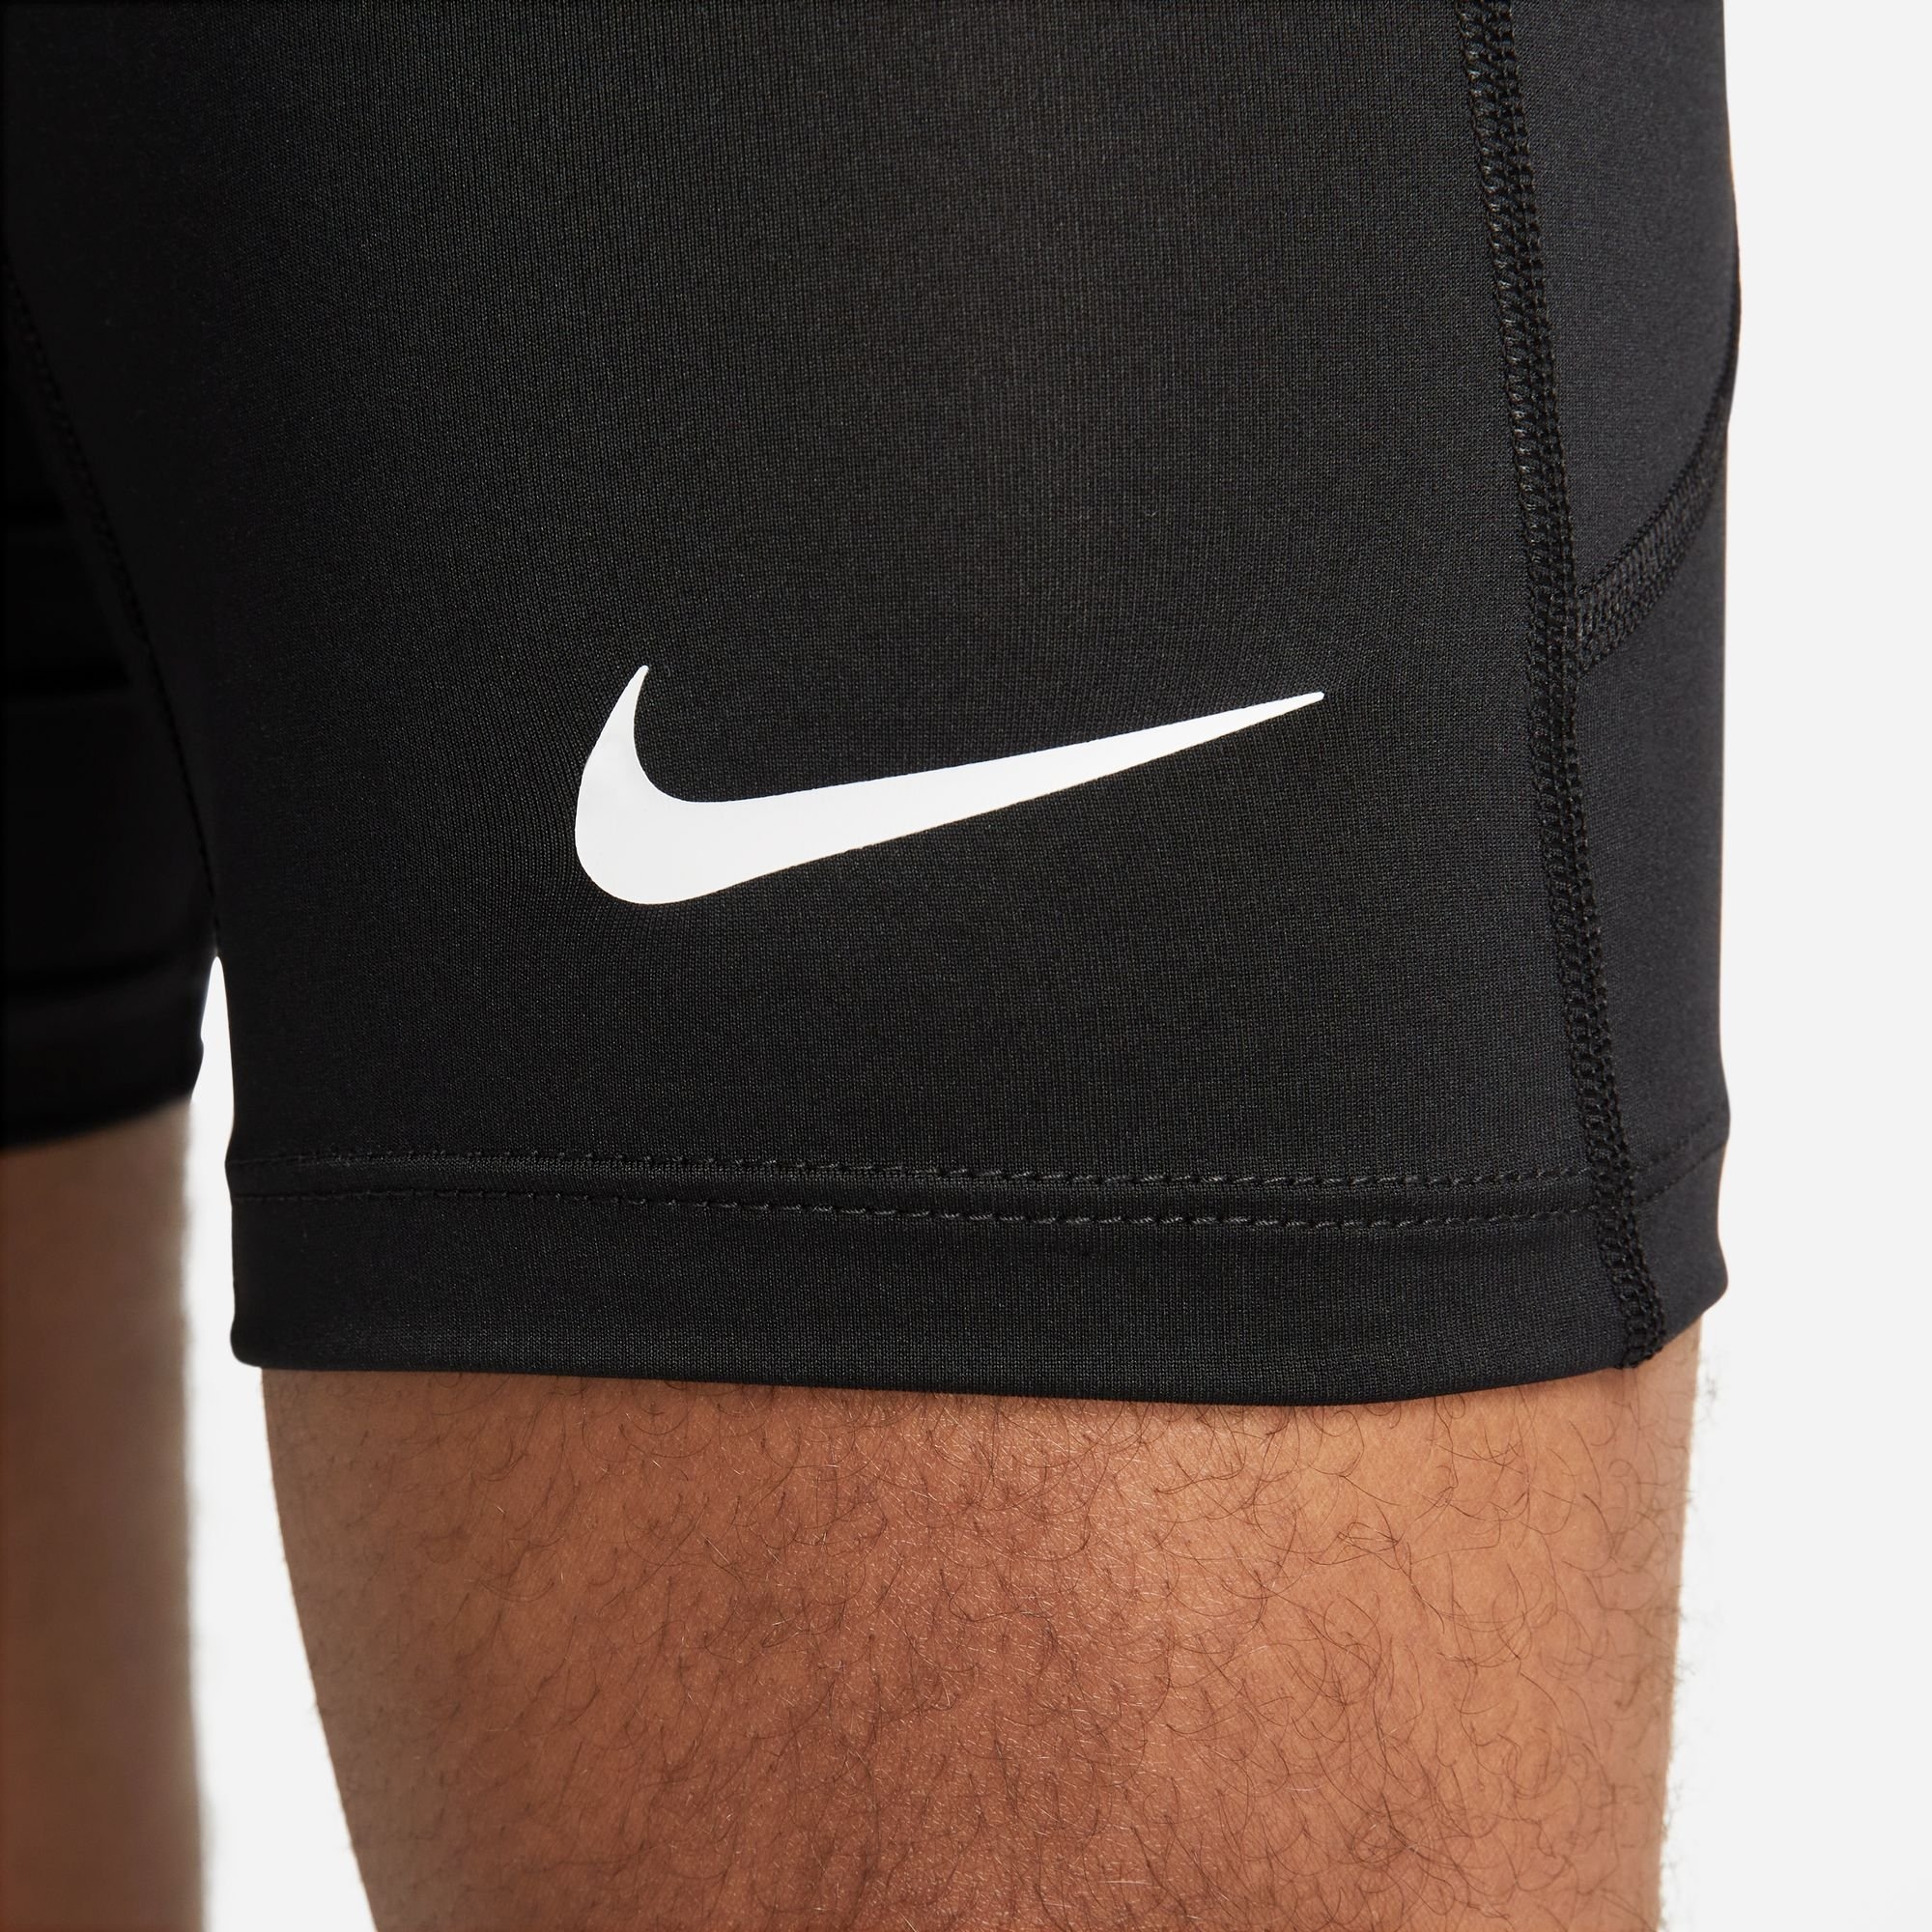 magneet vleet Vriend Nike Trainingstights PRO DRI-FIT MEN'S " SHORTS bestellen bij | OTTO